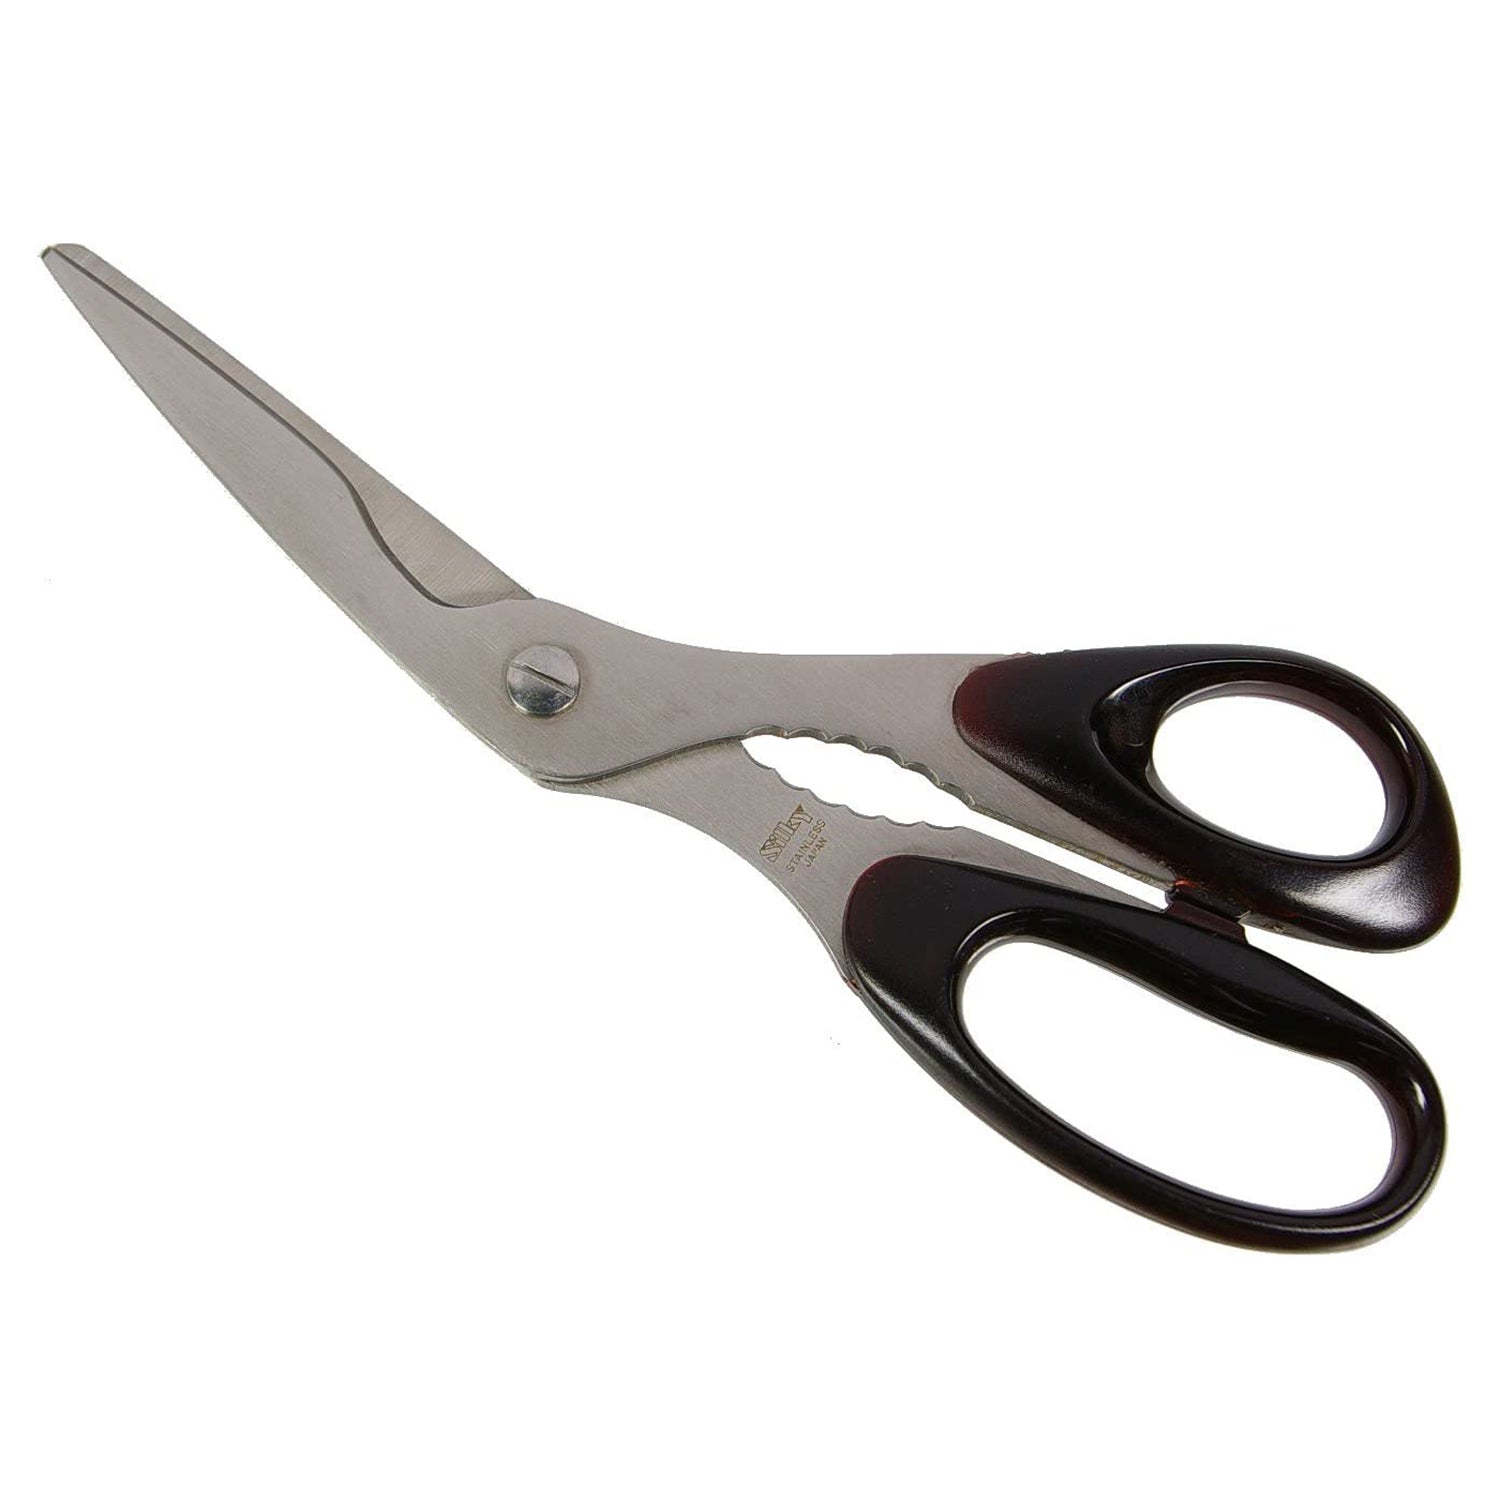 SUNCRAFT Stainless Steel Left-Handed Kitchen Scissors - Globalkitchen Japan